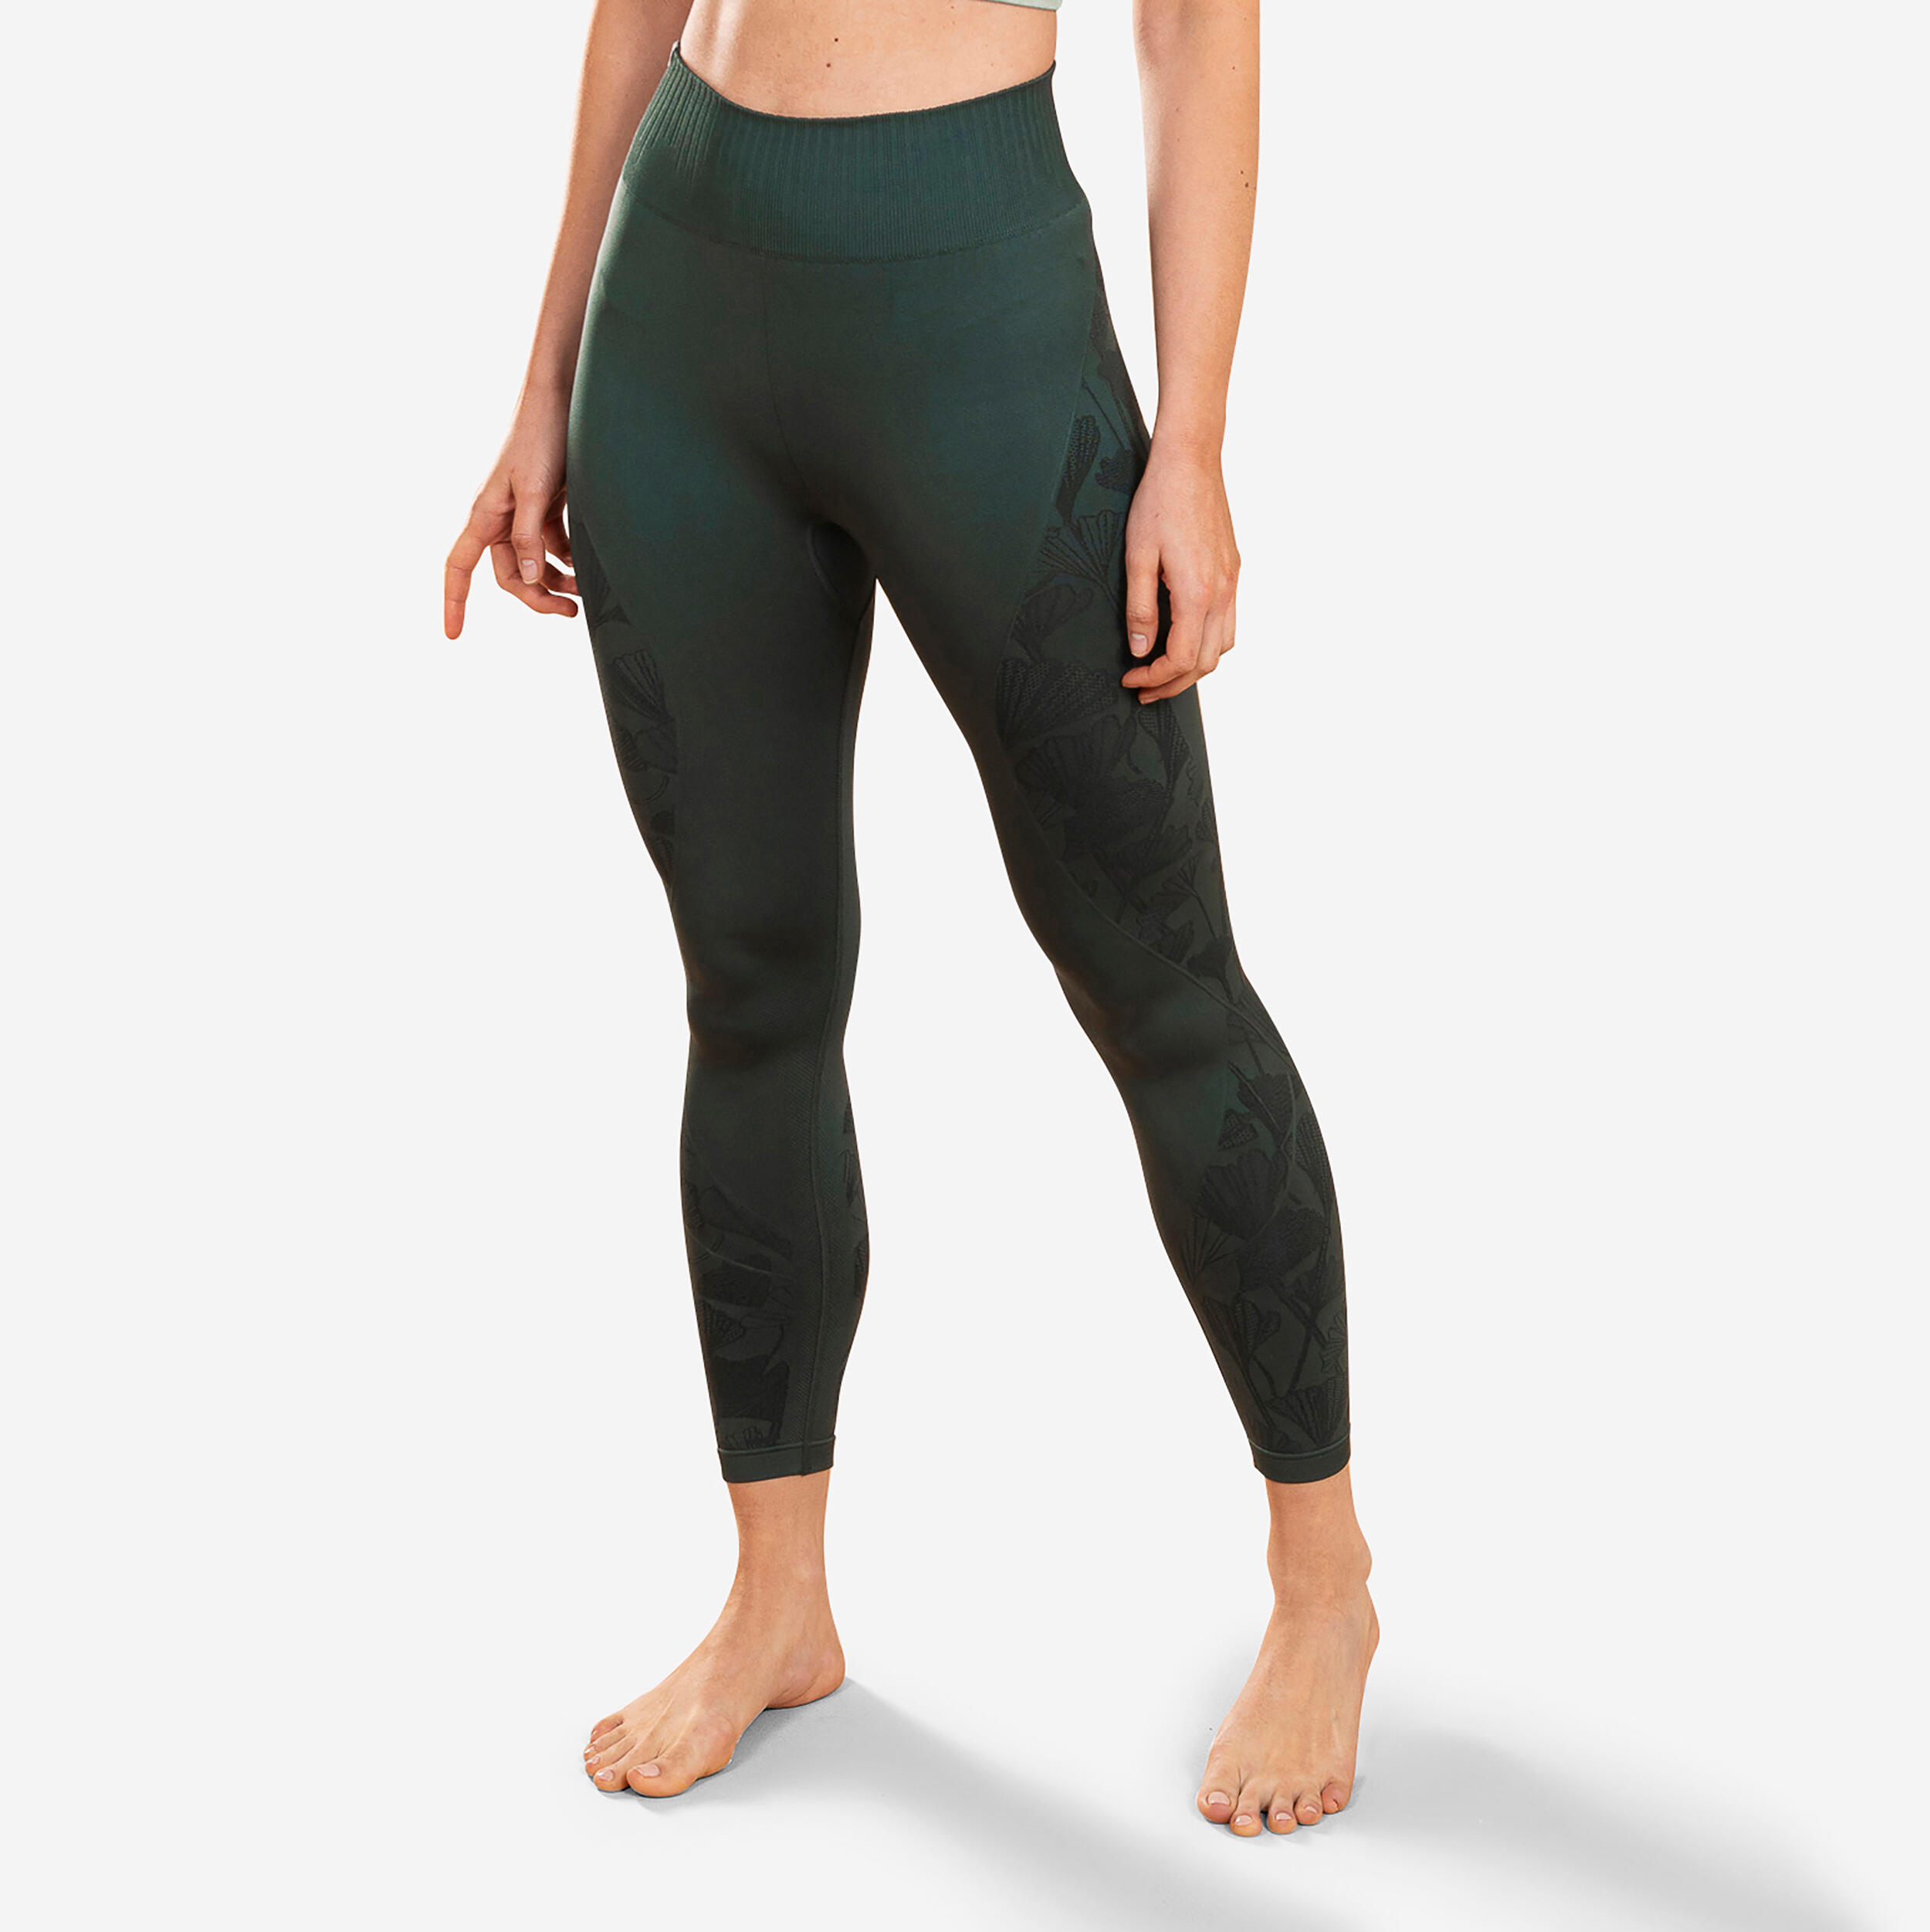 KIMJALY 7/8 Seamless Dynamic Yoga Leggings - Dark Green